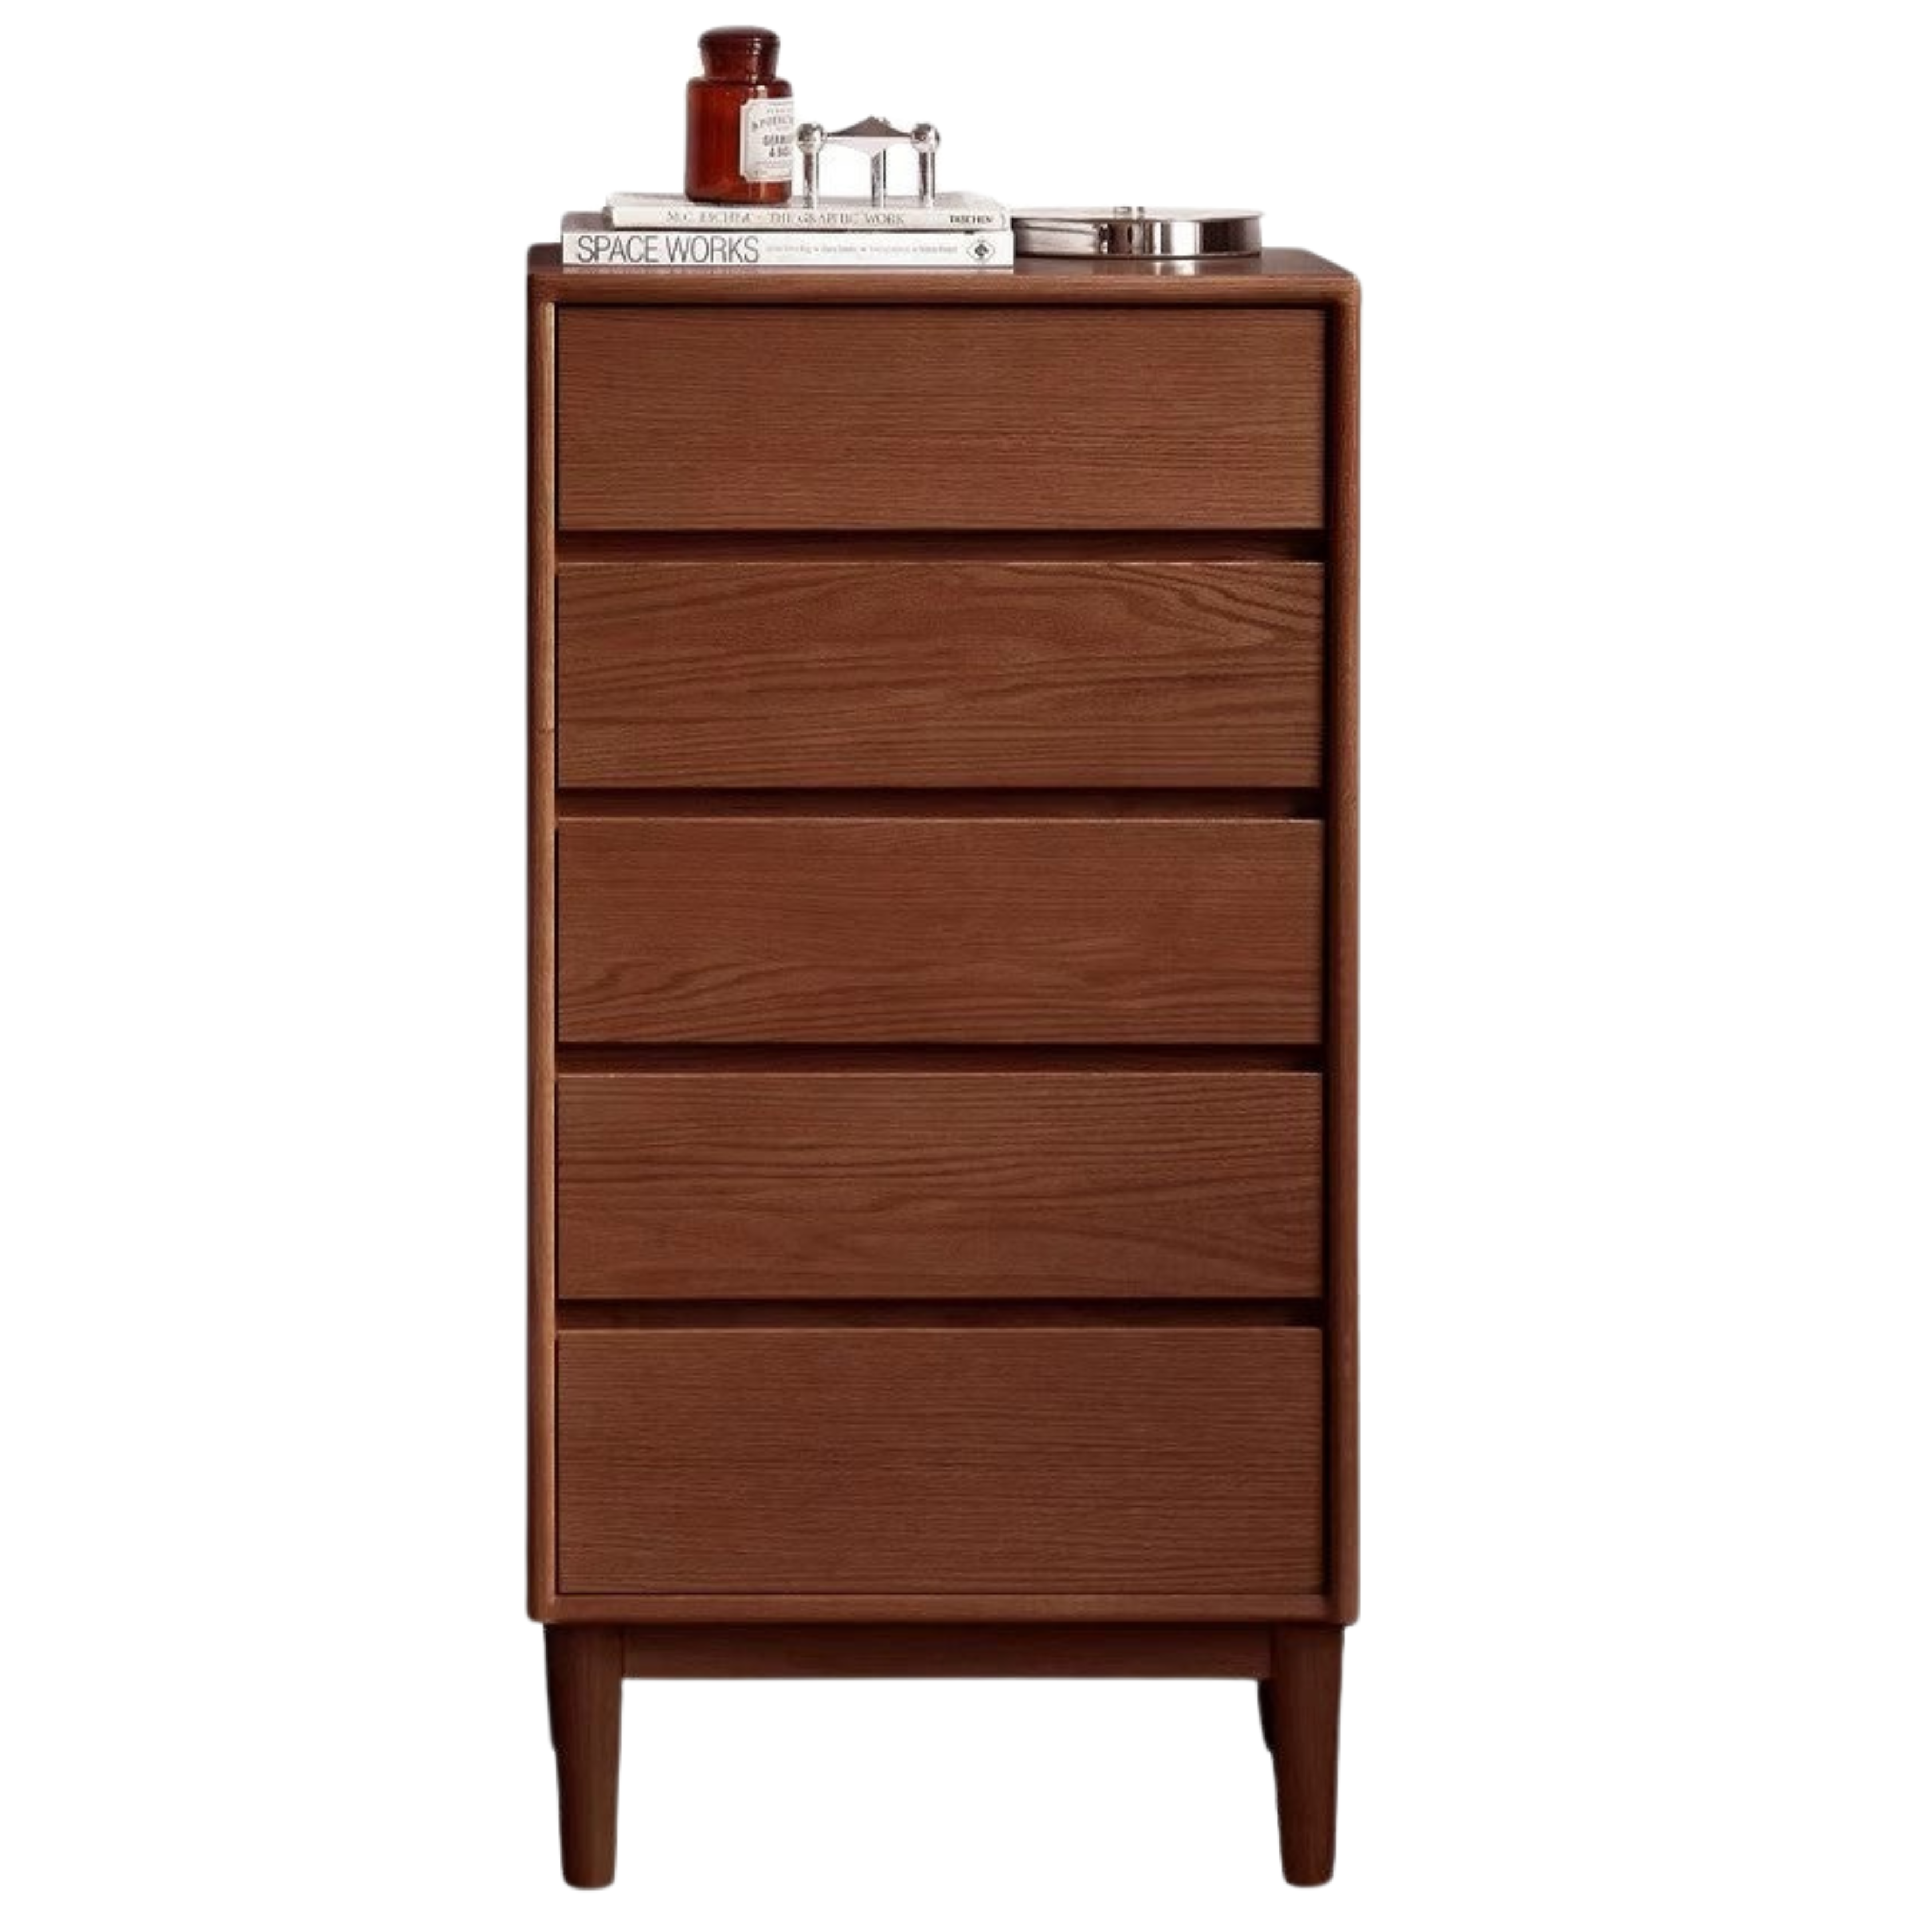 Ash Solid Wood Dresser, Drawer Storage Cabinet: